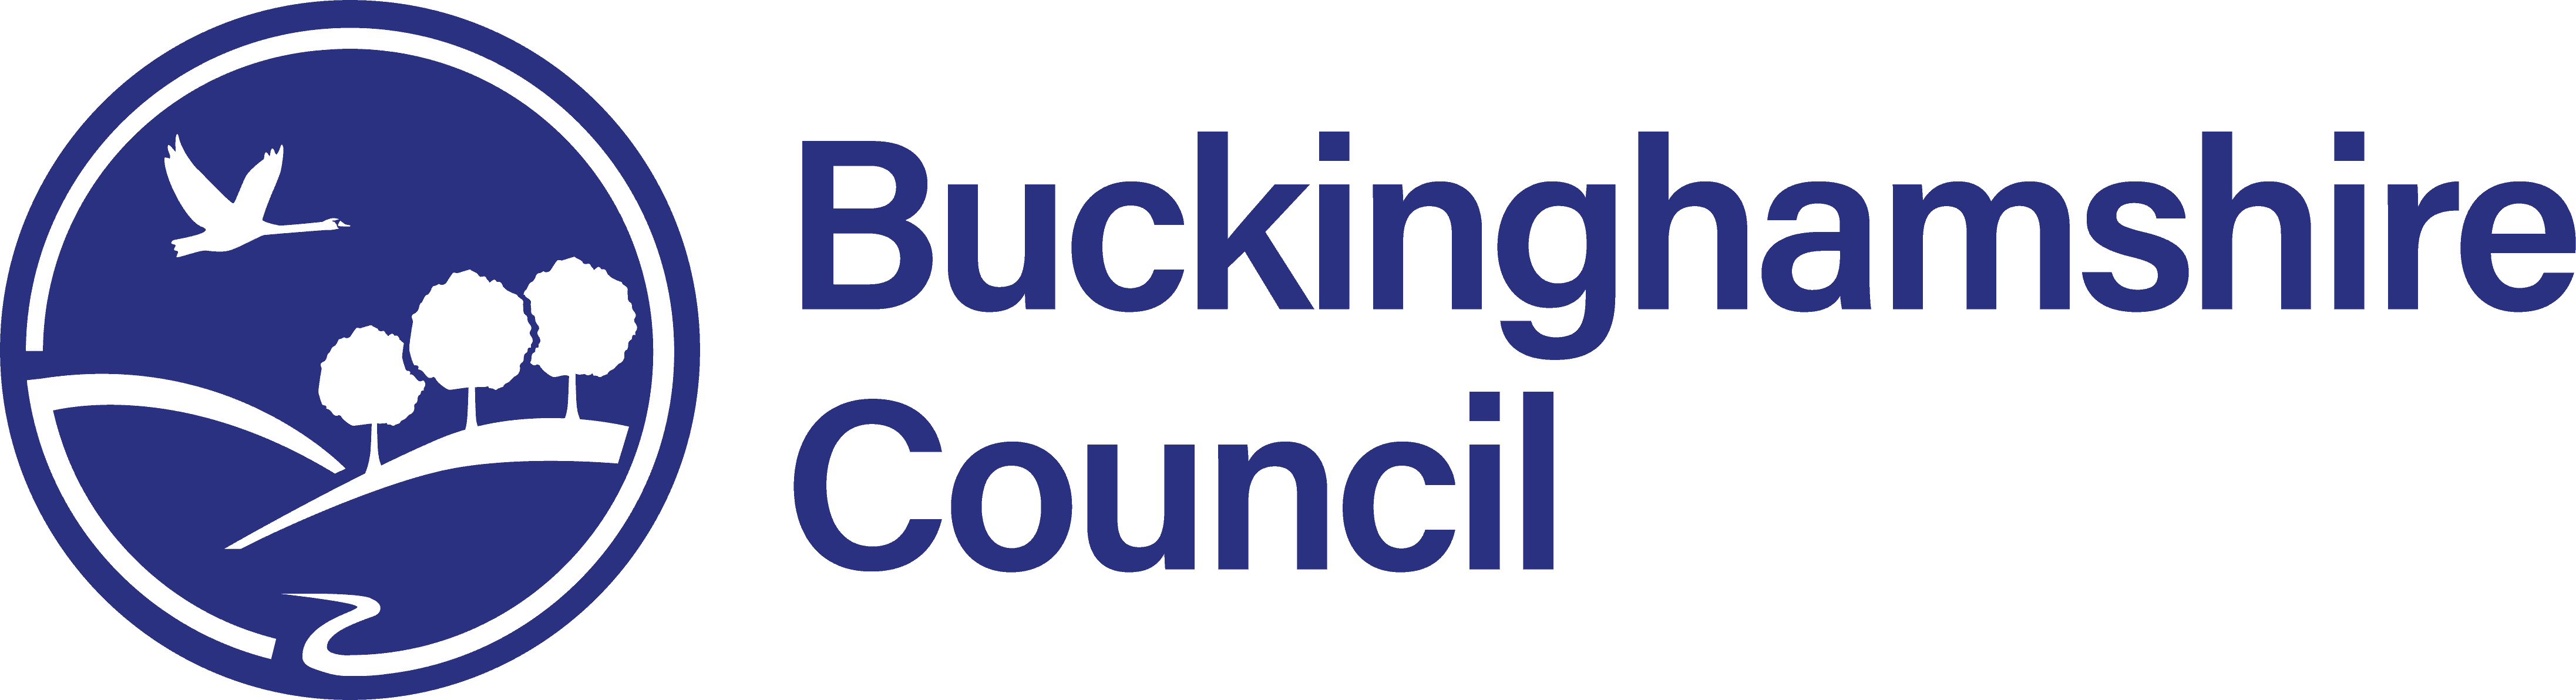 https://ef7reu2nmnd.exactdn.com/wp-content/uploads/2021/09/Buckinghamshire-Council-Blue-landscape-version.png?strip=all&lossy=0&w=1400&ssl=1